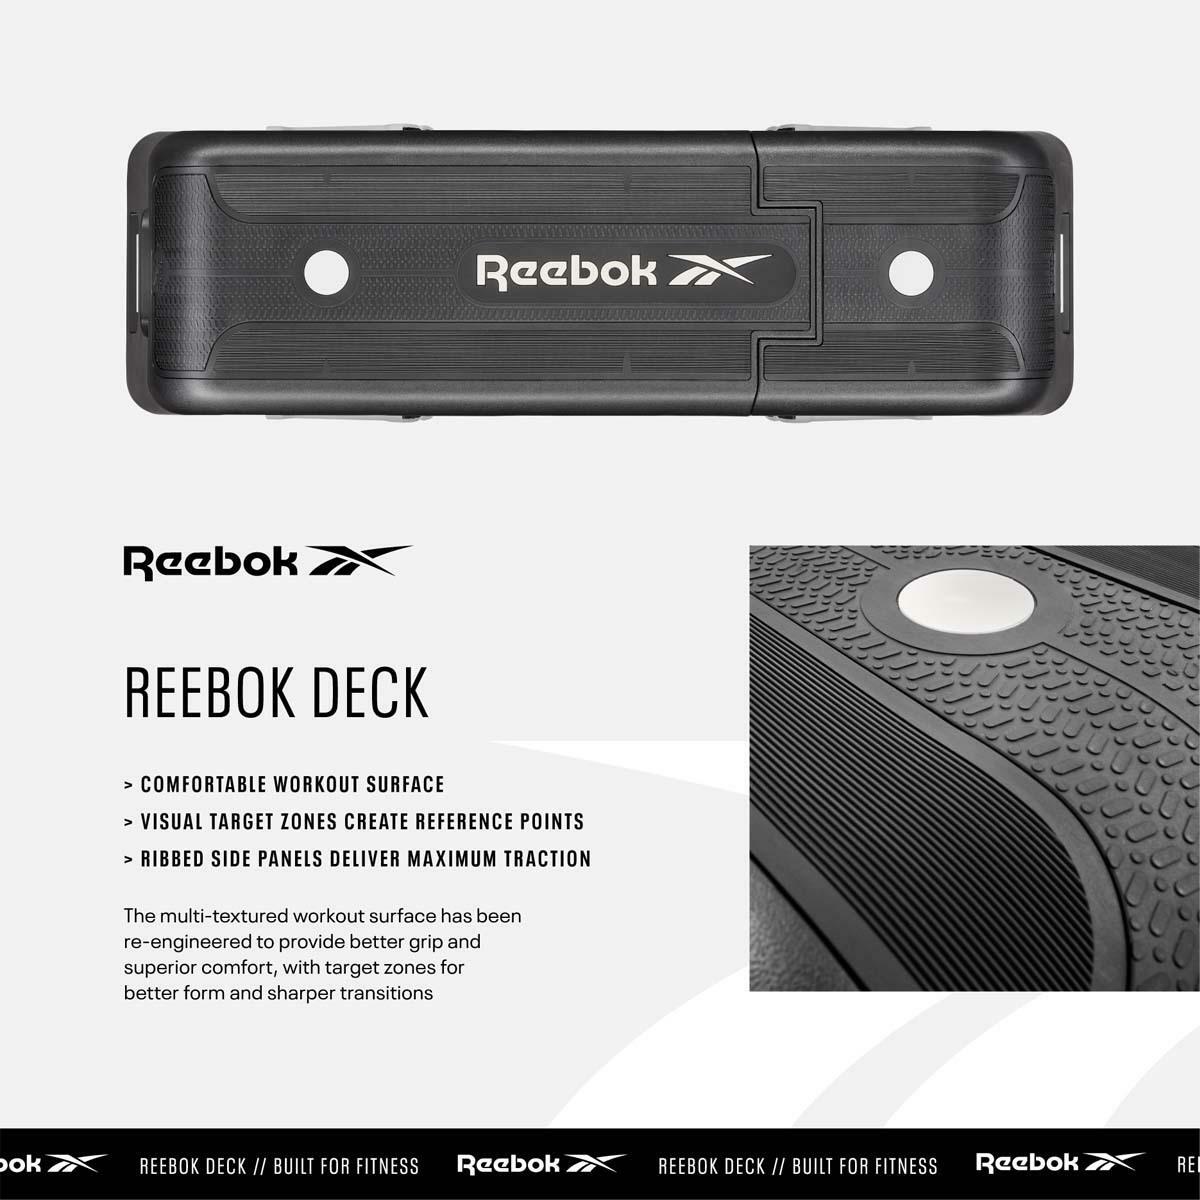 Reebok Deck Step/Bench RAP-15170